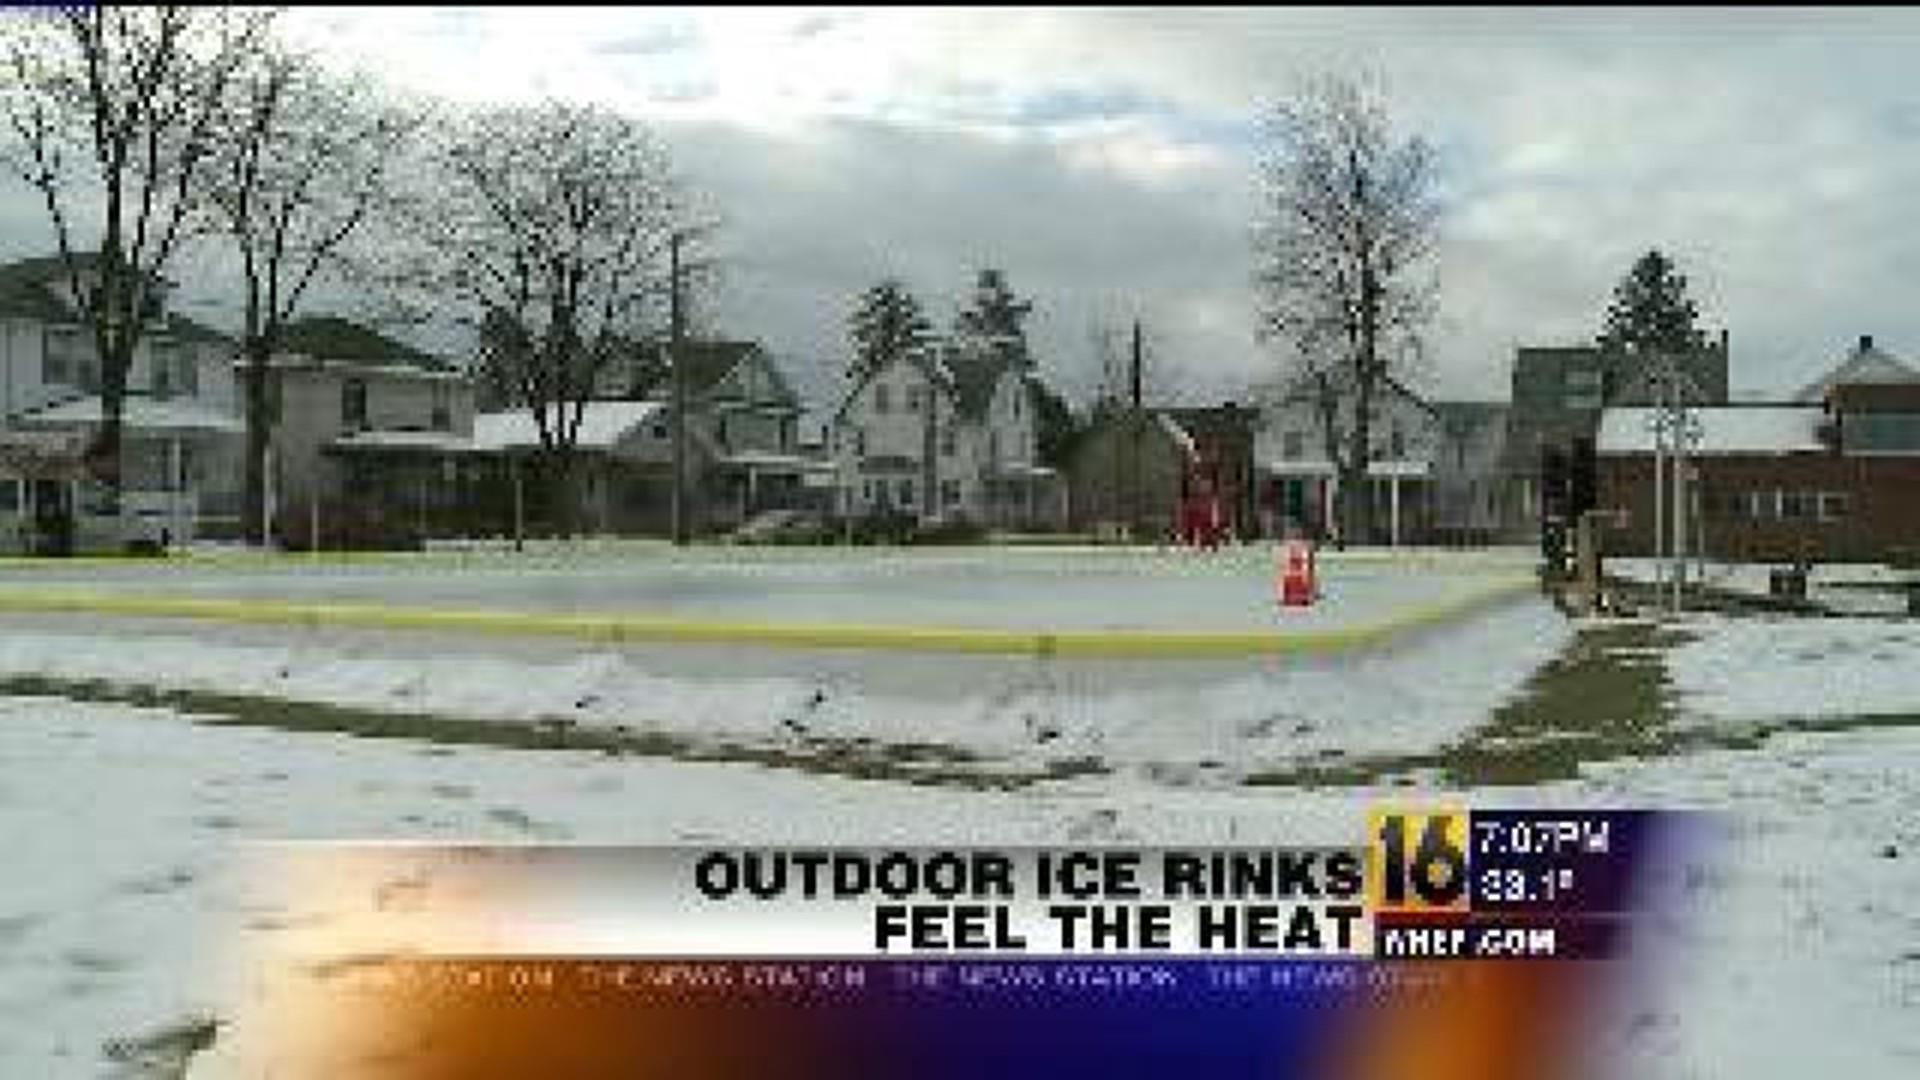 Outdoor Ice Rinks Feel the Heat